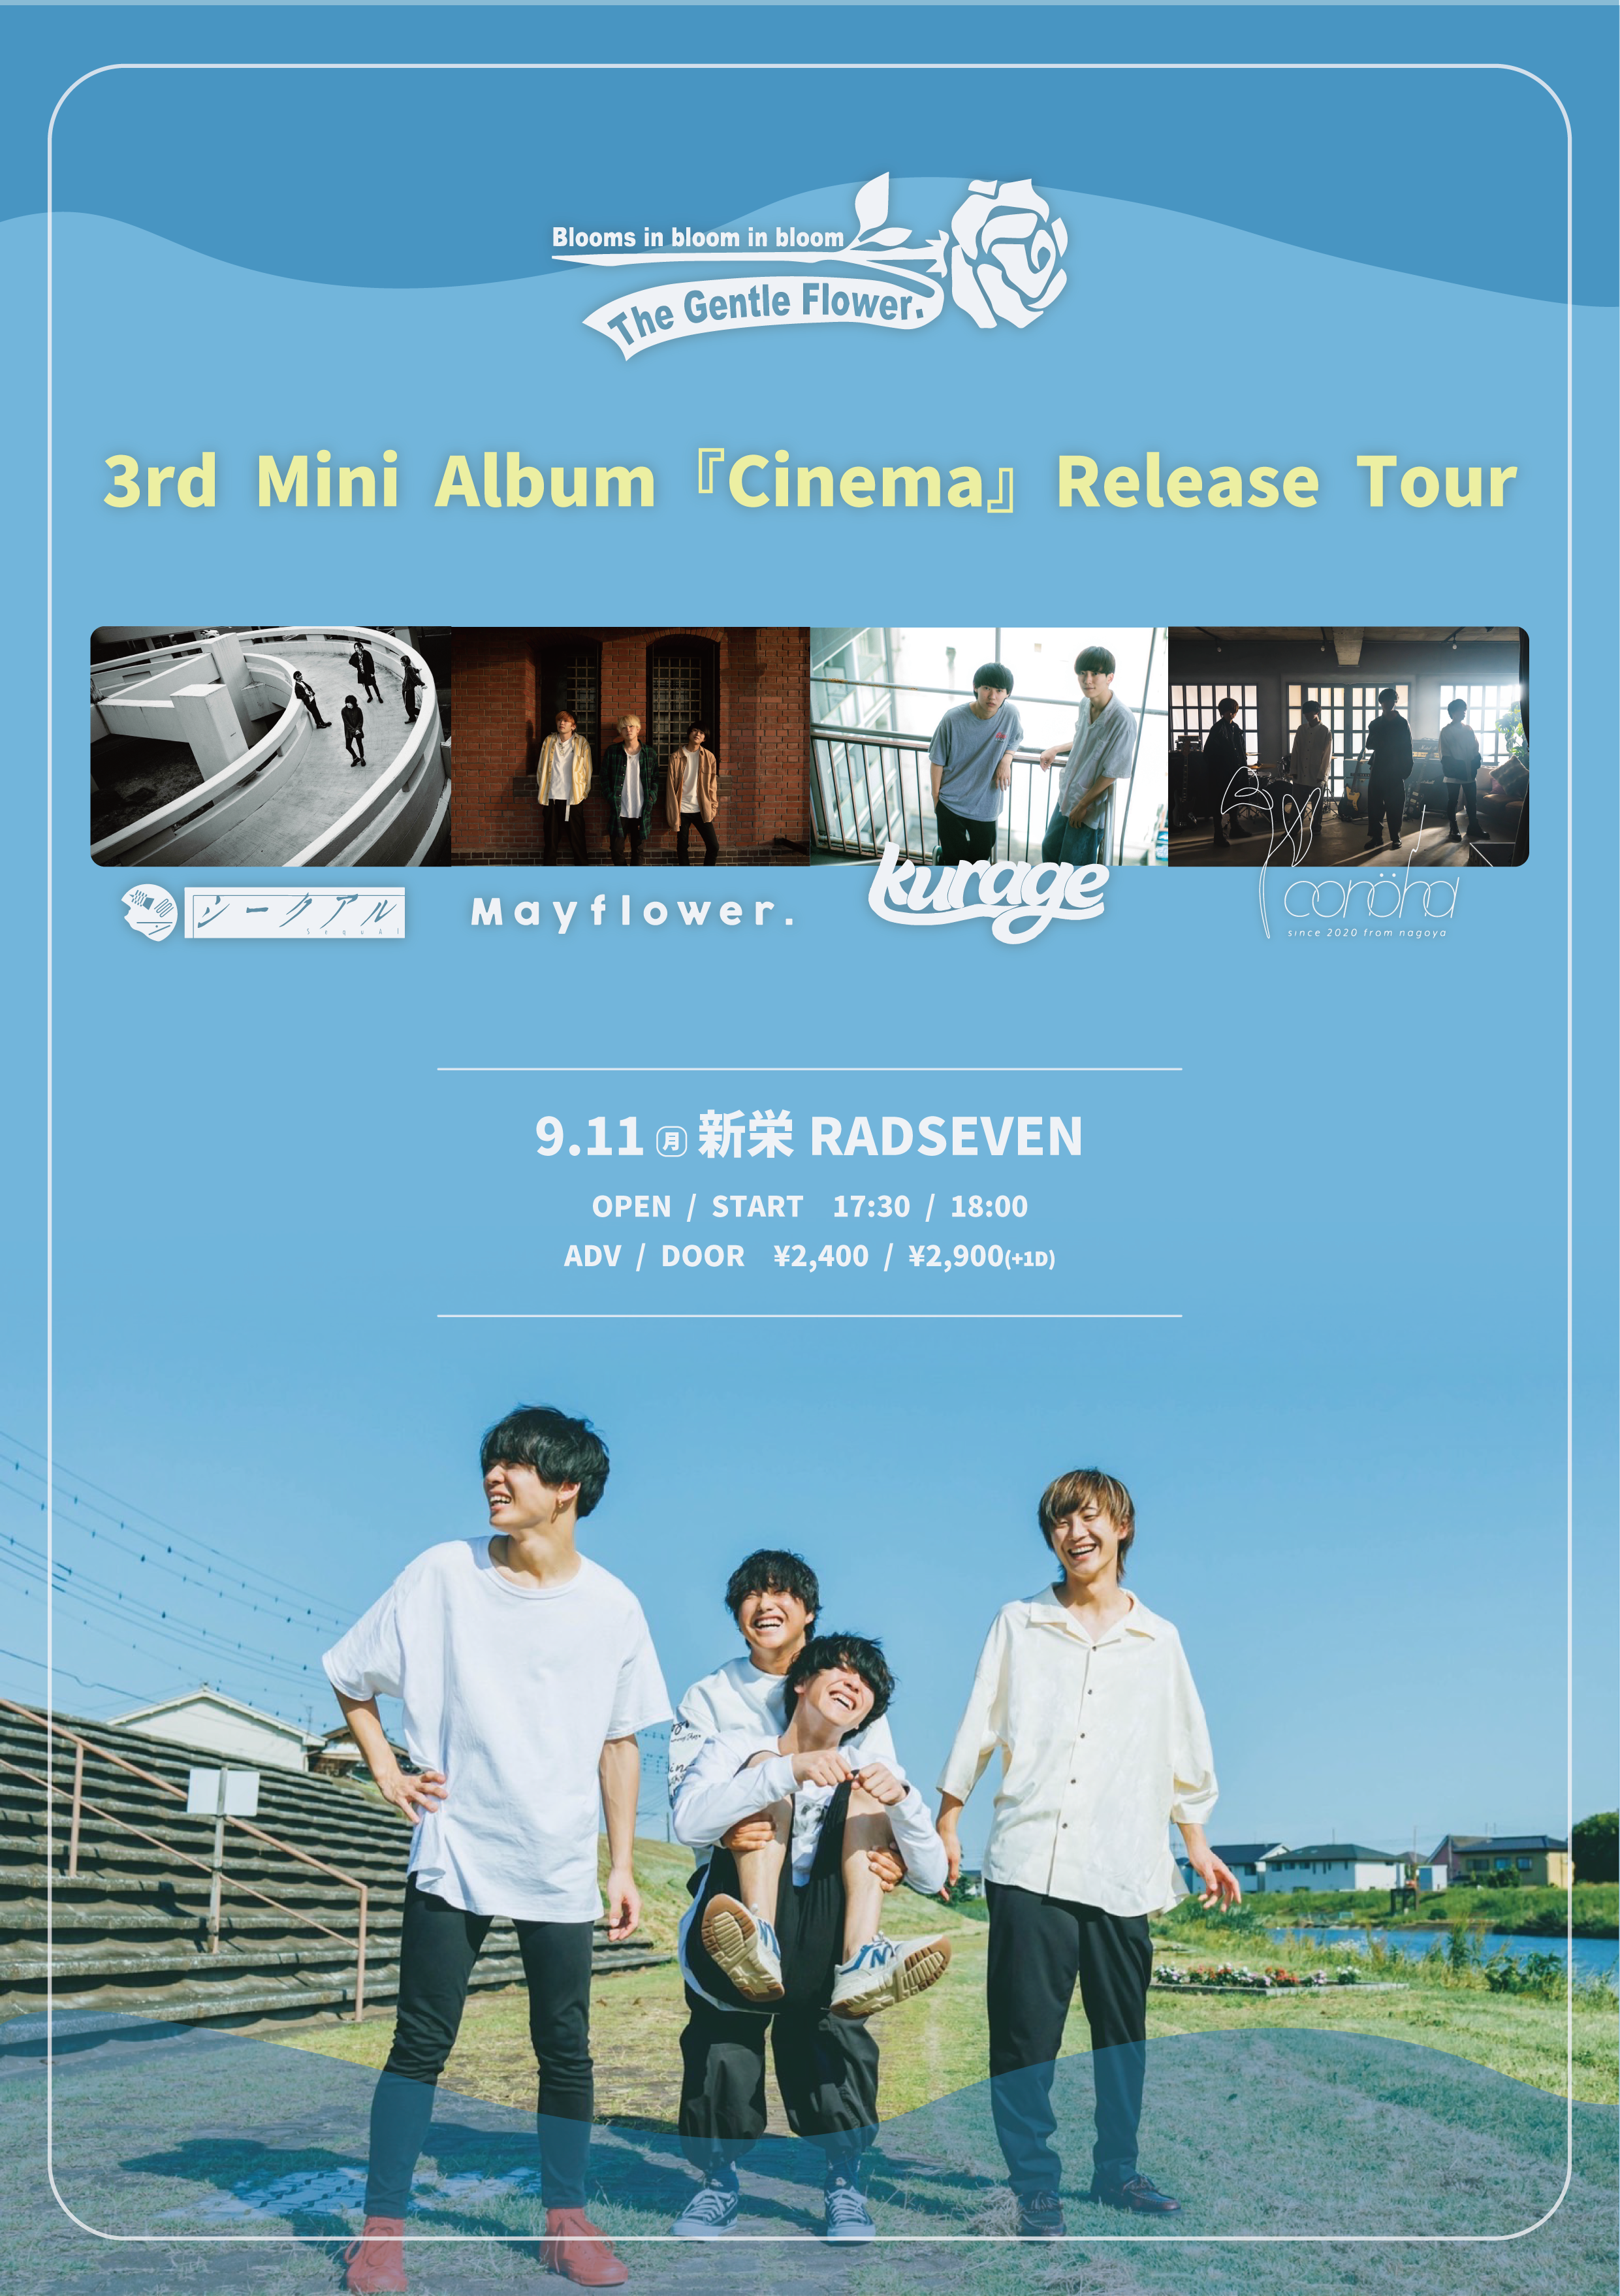 The Gentle Flower. 3rd Mini Album『Cinema』release event